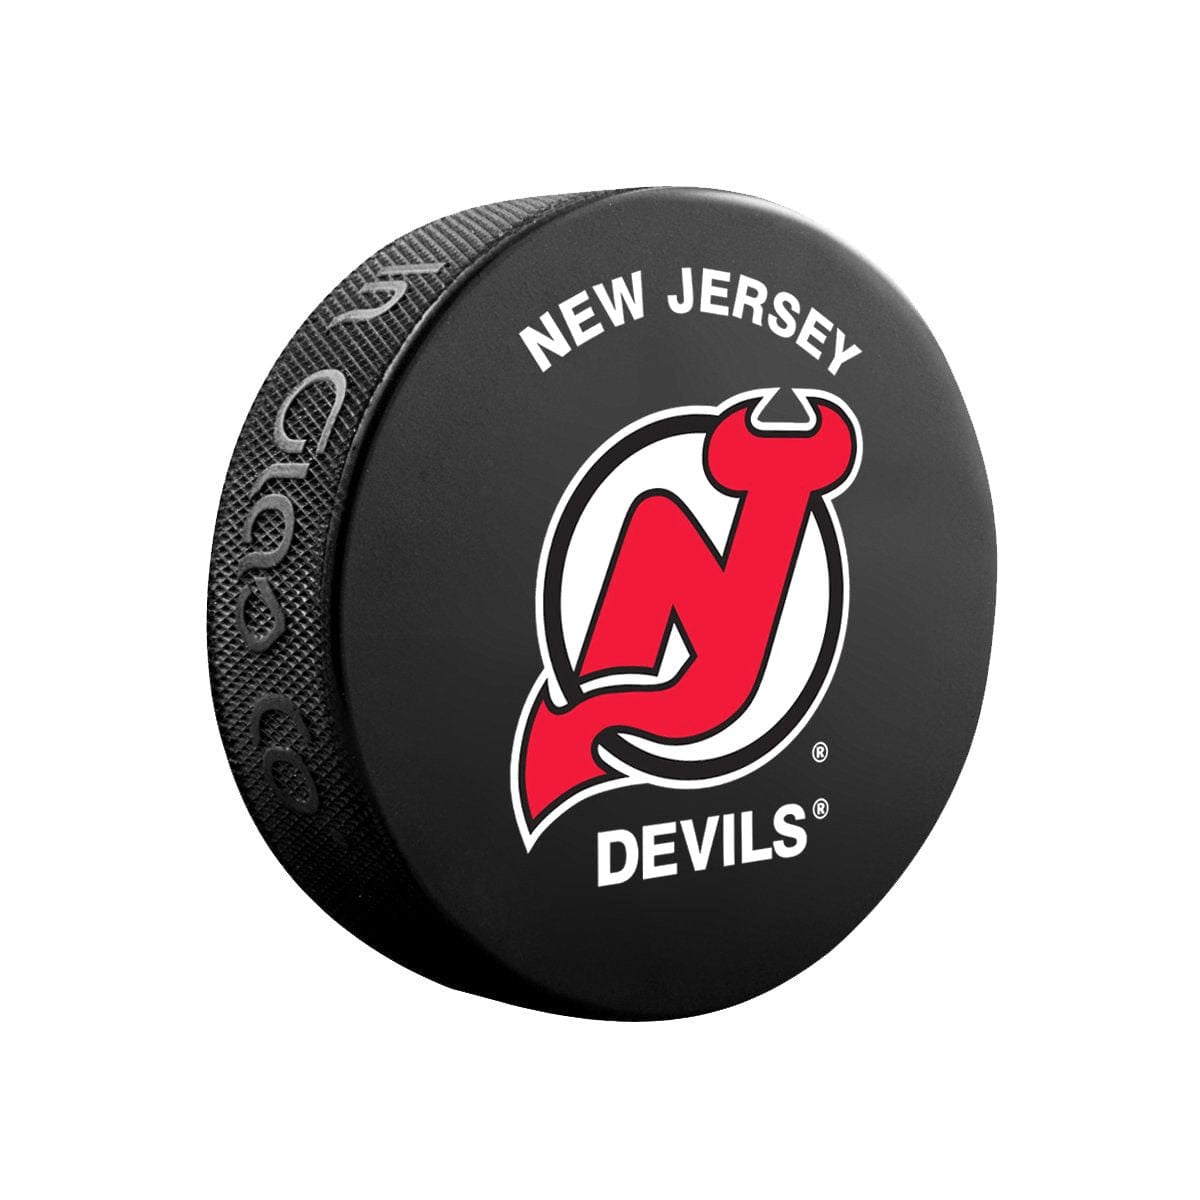 New Jersey Devils Inglasco NHL Basic Logo Hockey Puck - The Hockey Shop Source For Sports